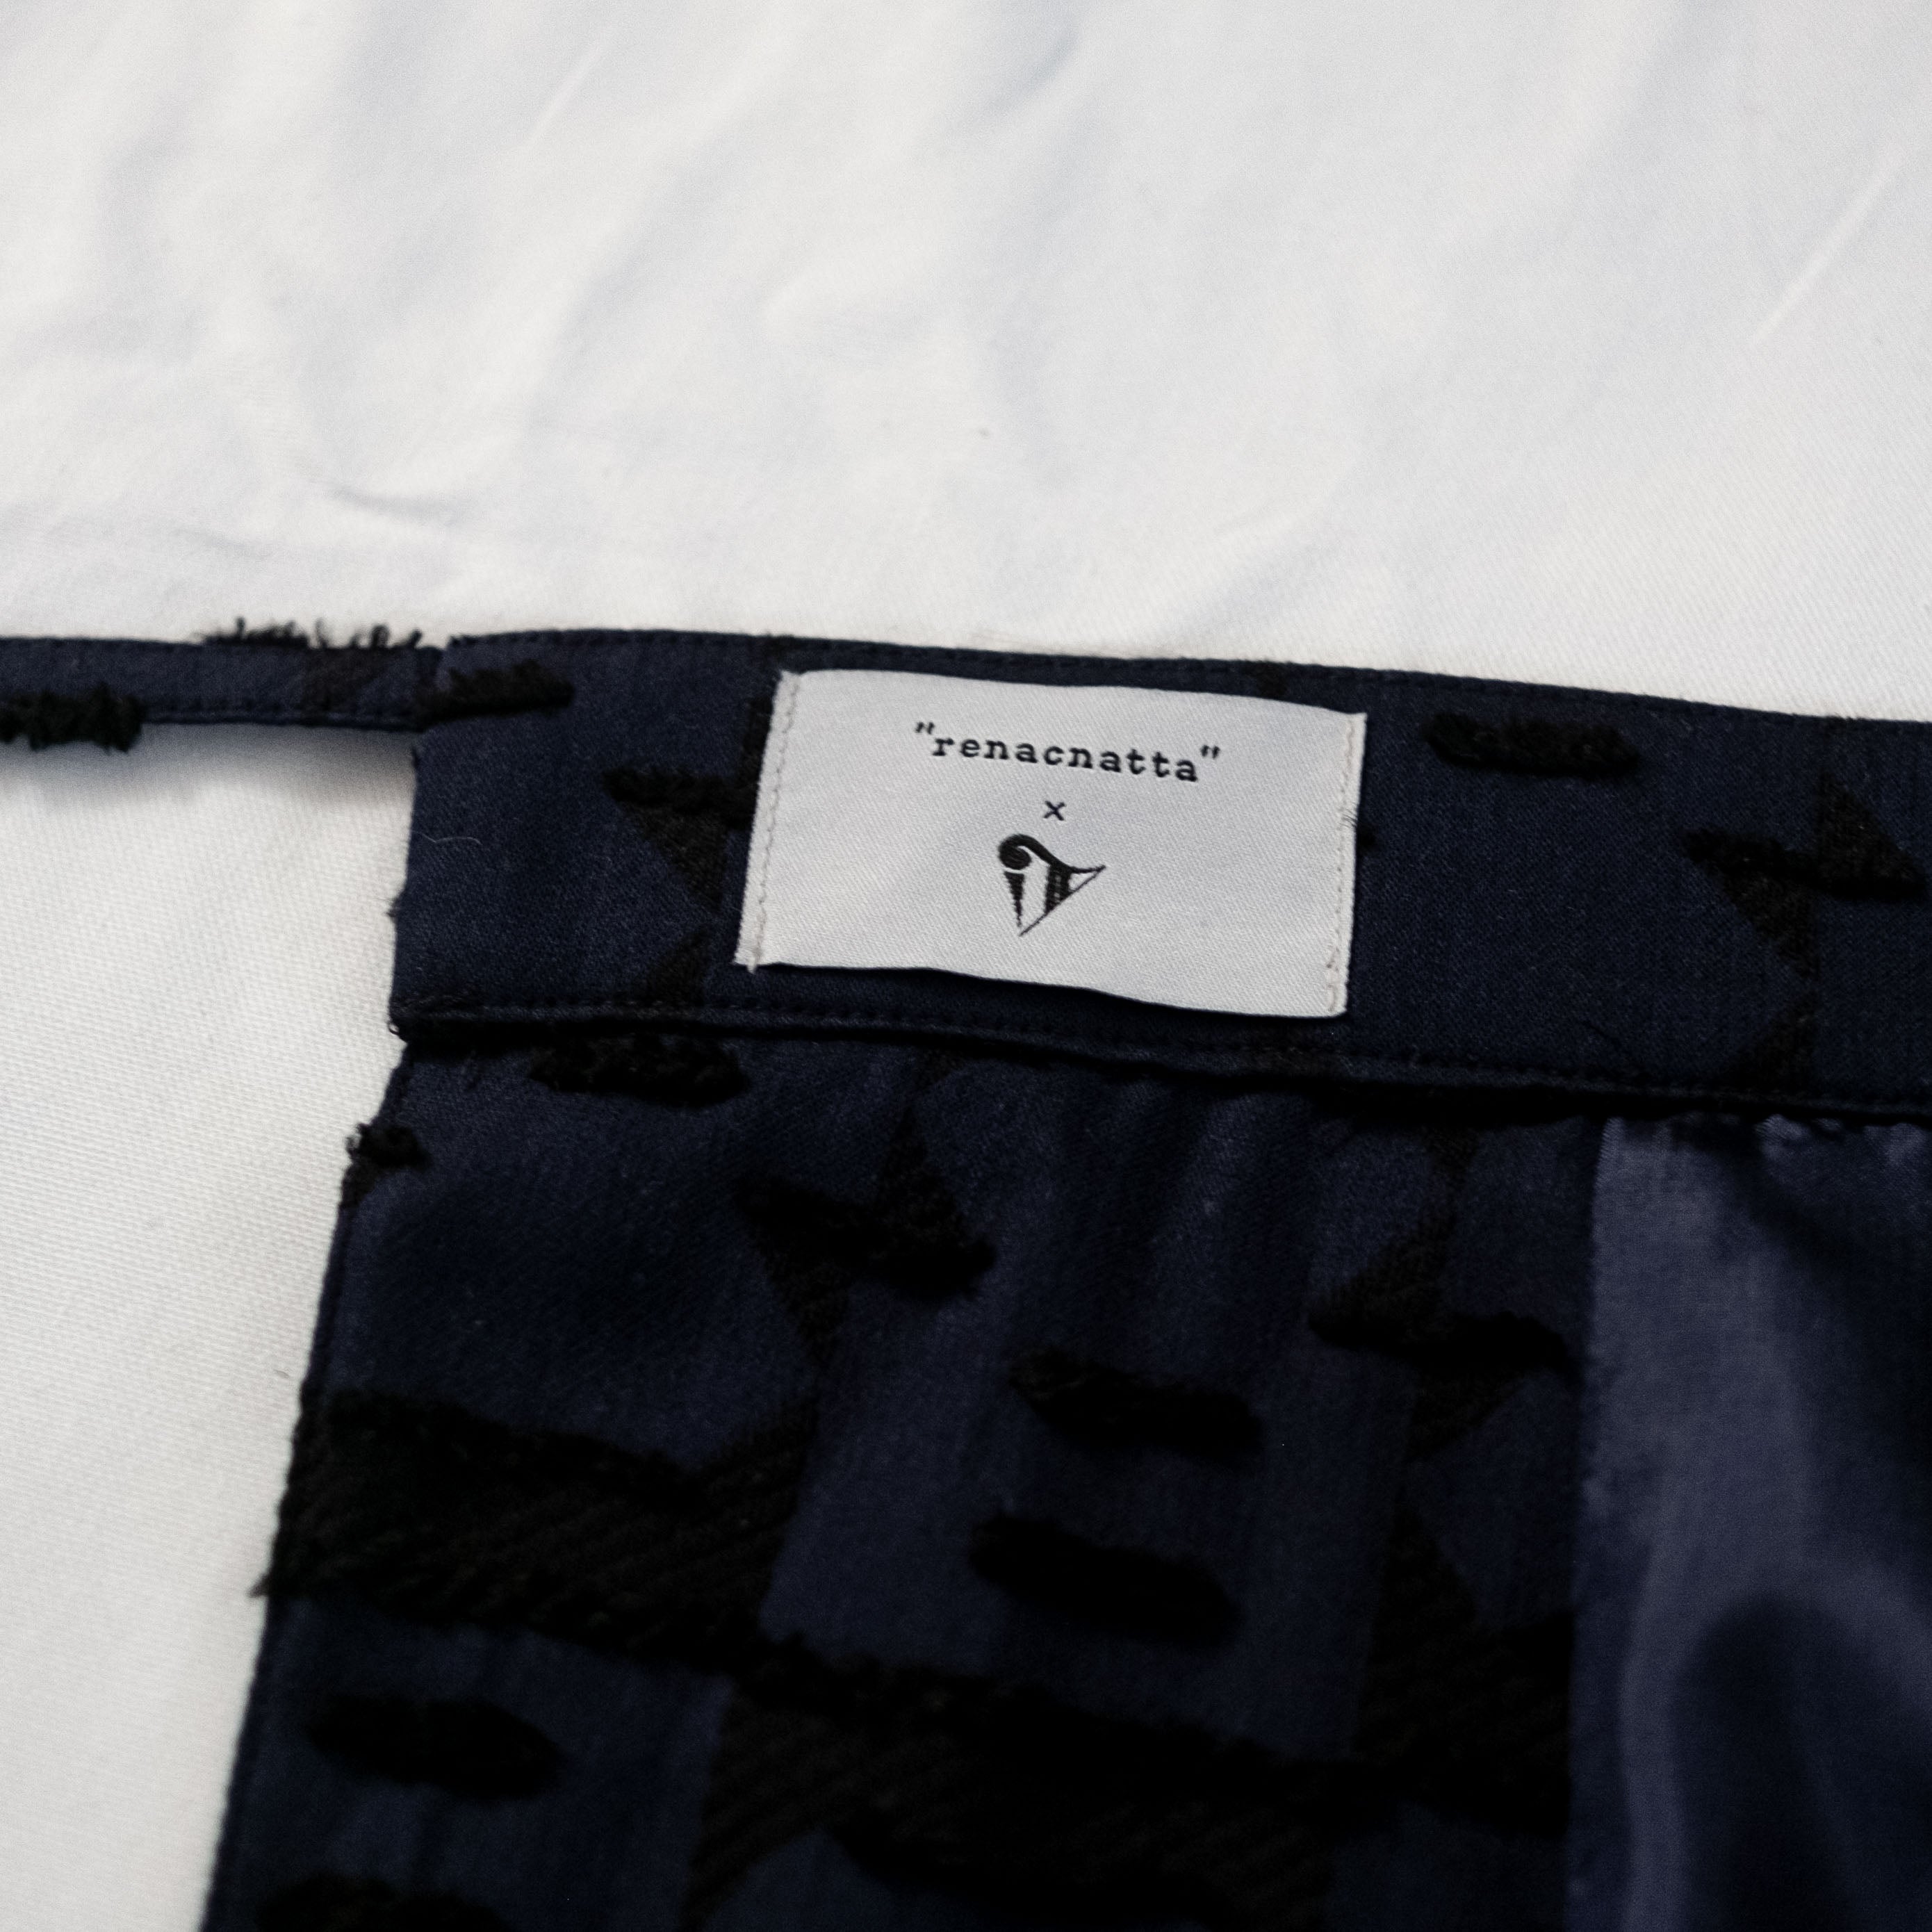 [Made-to-order] Banshu Mermaid Wrap Skirt - Soiree｜Collaboration with Shiki Gekidan